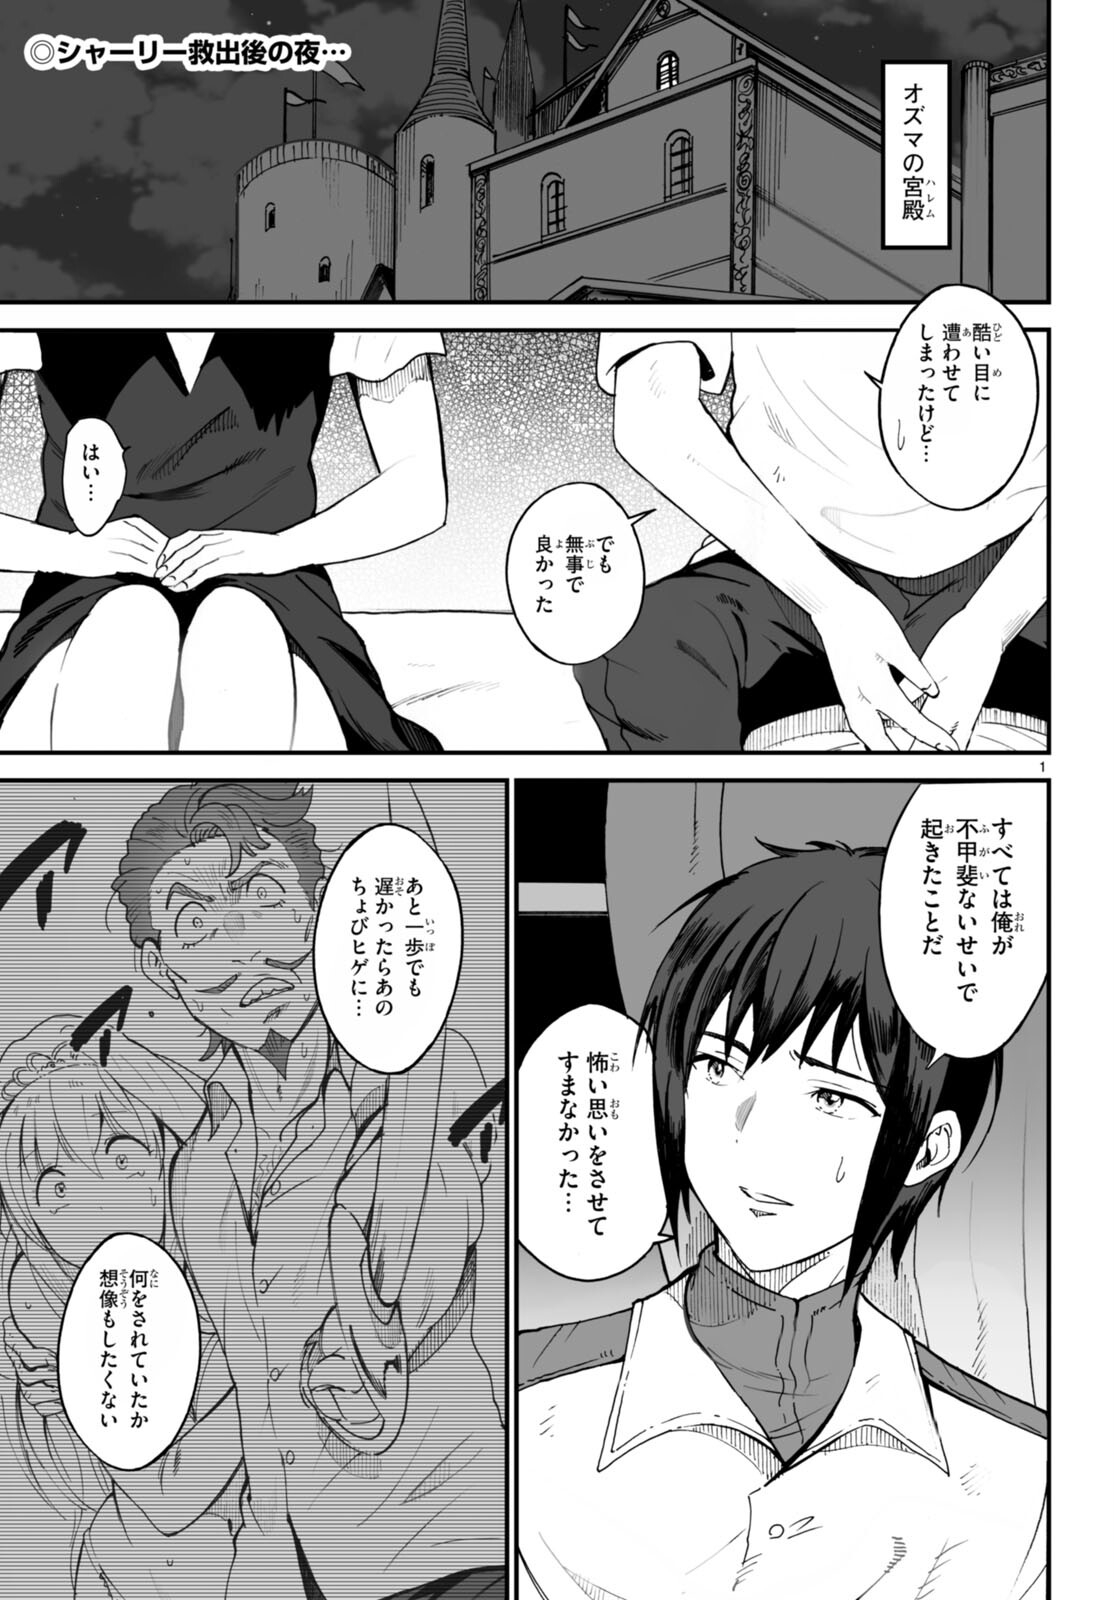 Densetsu no Ore - Chapter 5 - Page 3